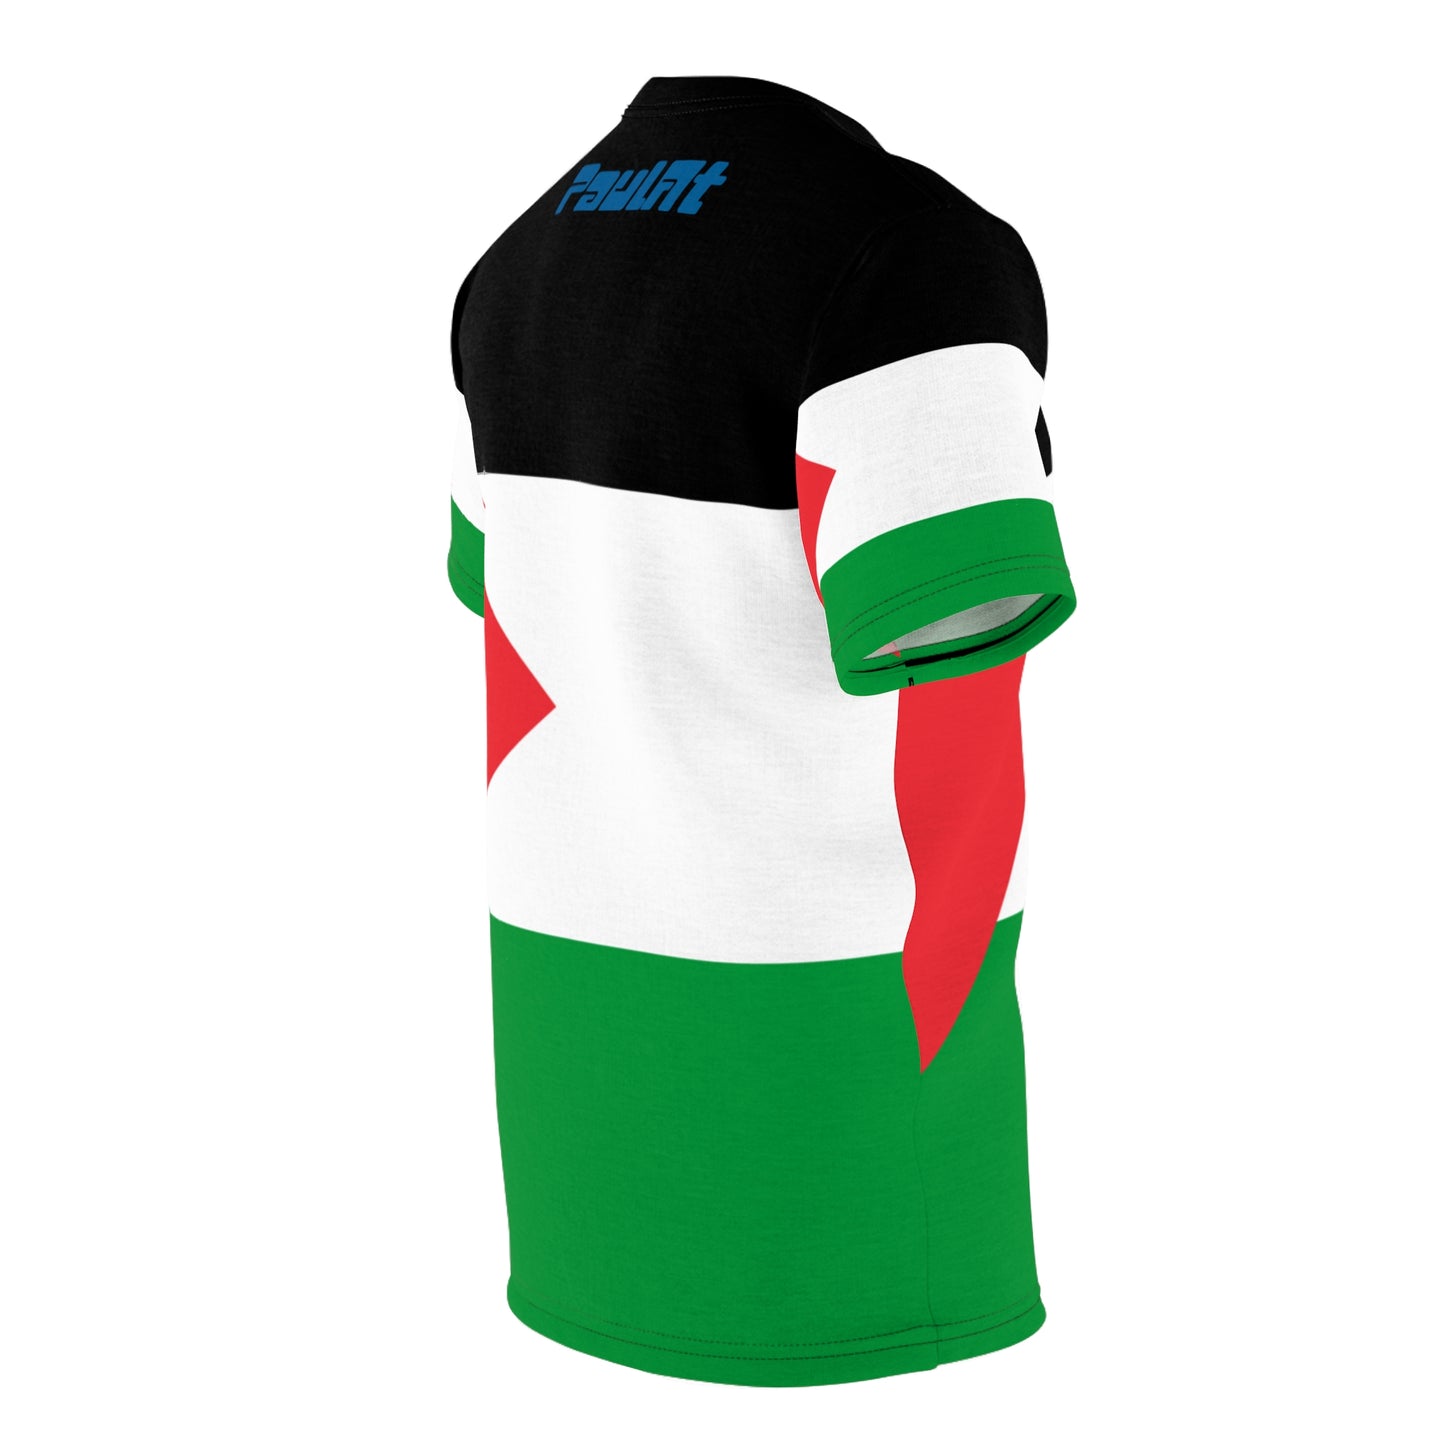 Palestine Unisex T-Shirt